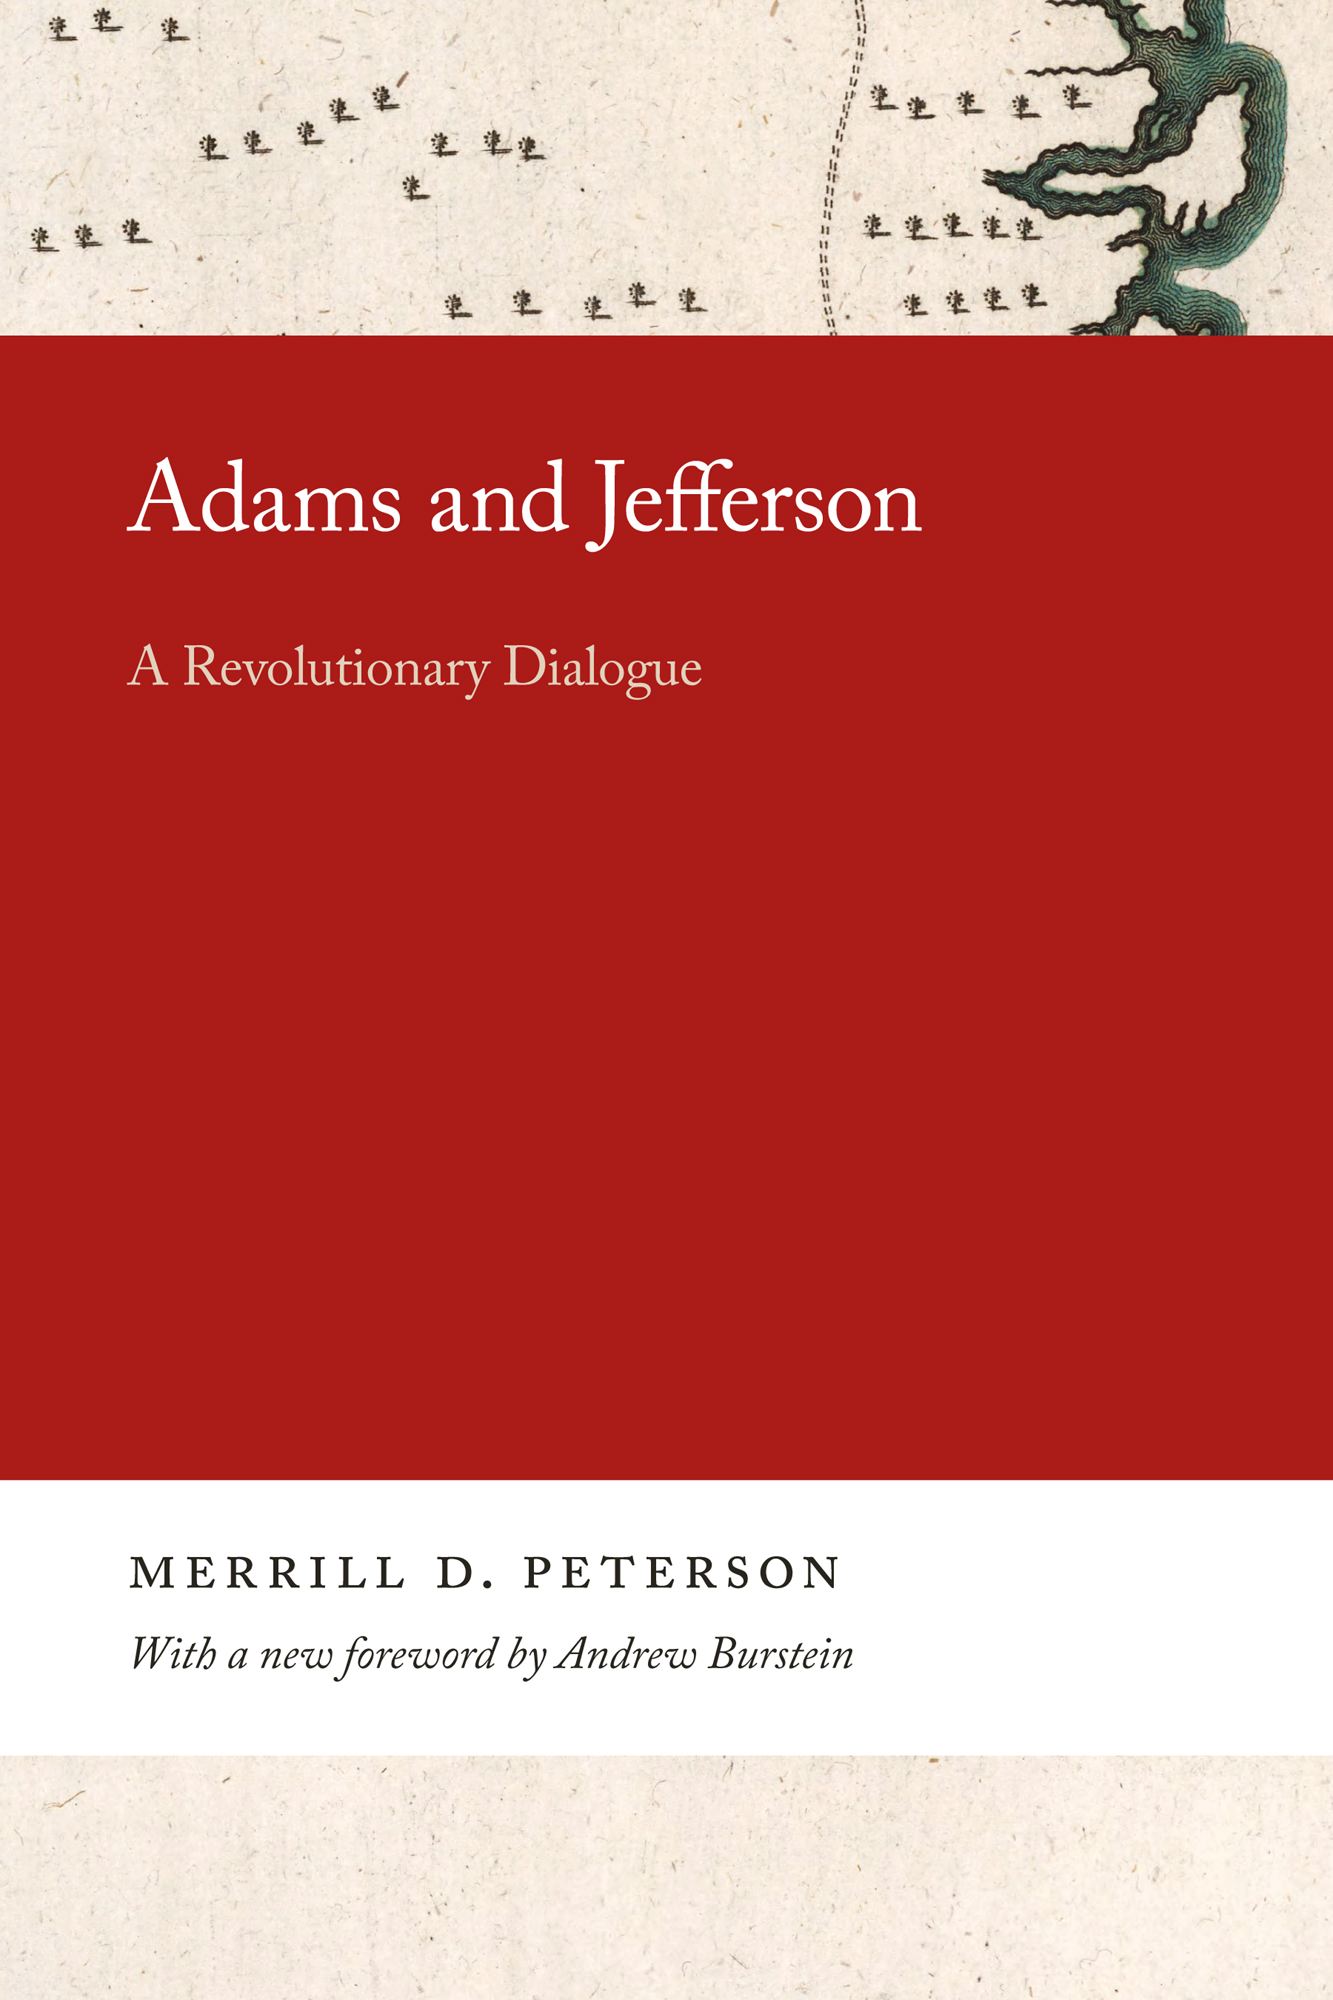 Cover of, Adams and Jefferson, a revolutionary dialogue.